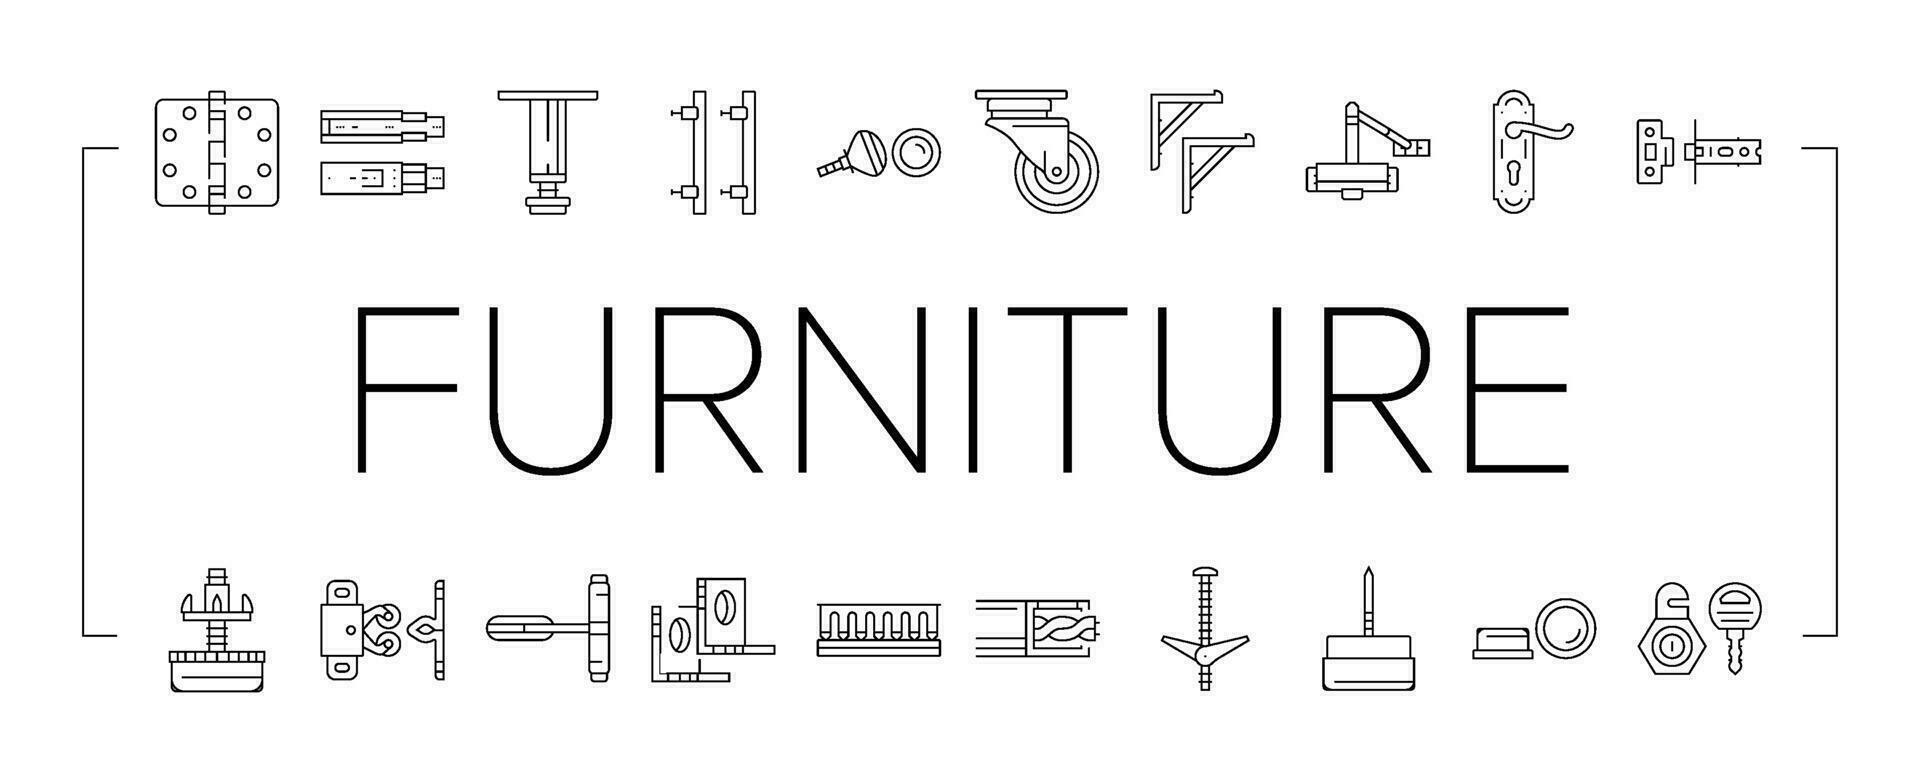 hardware furniture equipment icons set vector